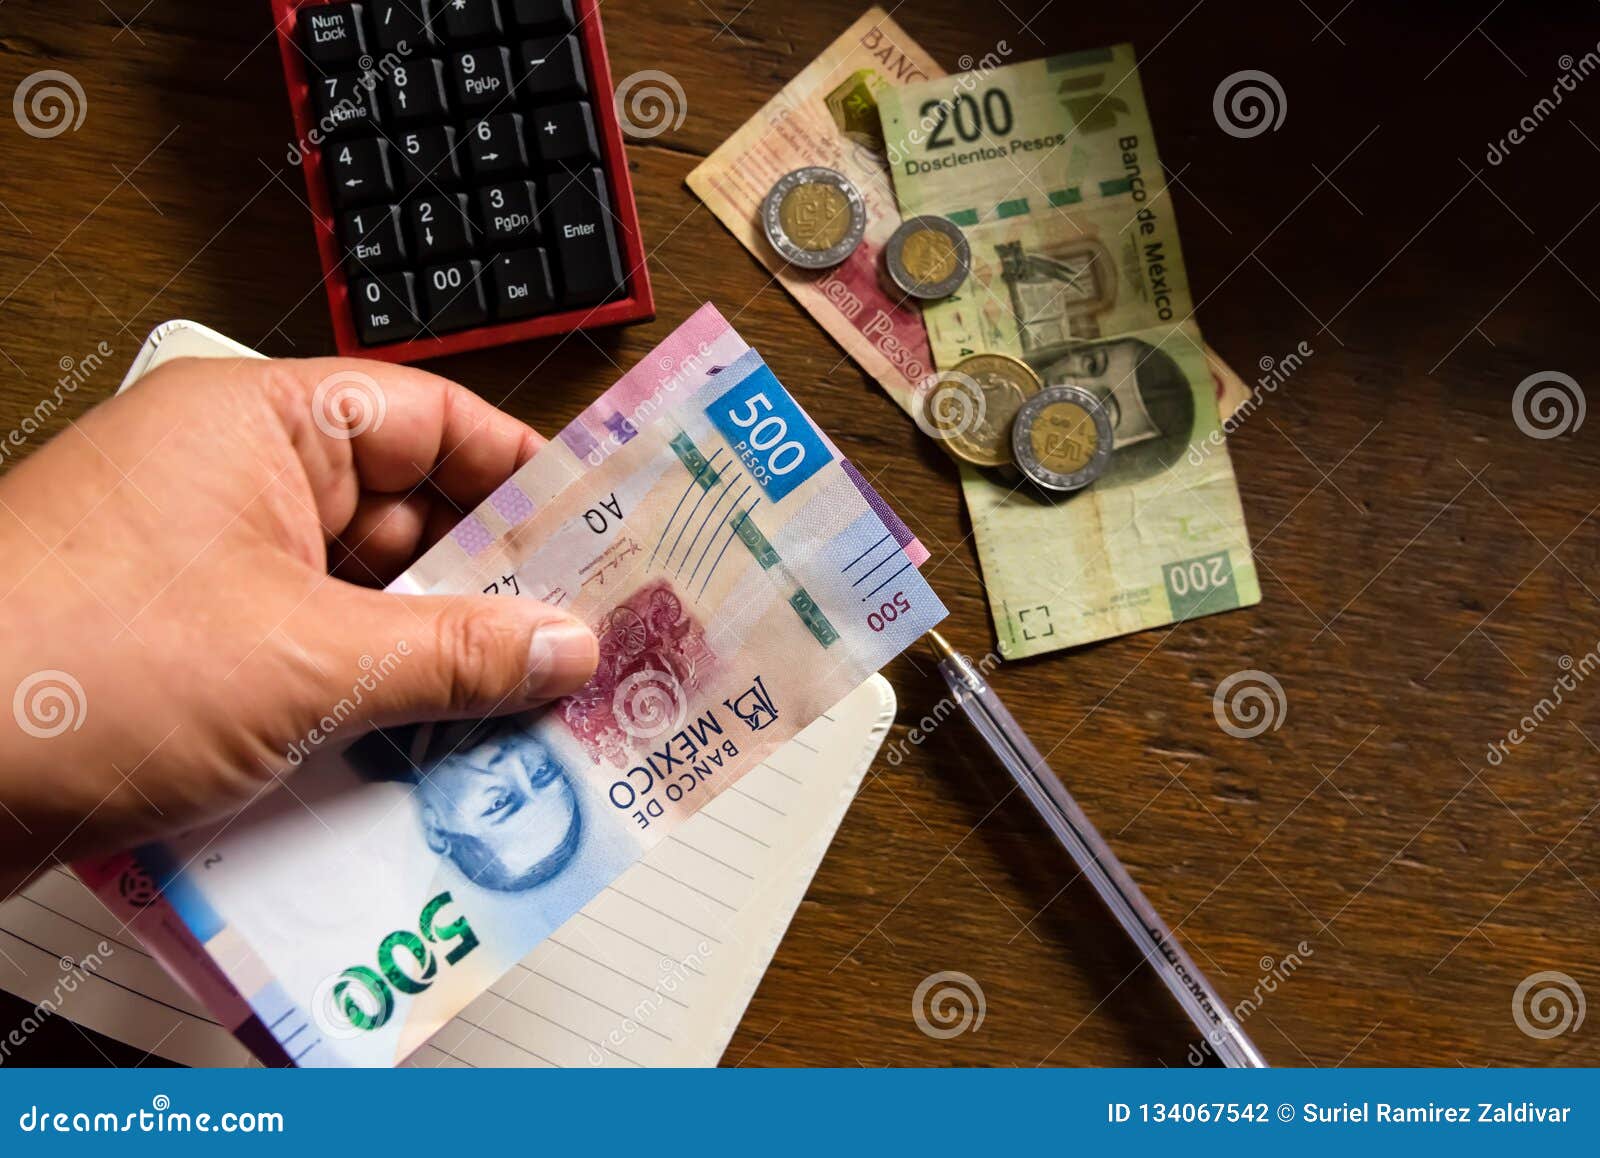 money - mexican pesos, making a budget